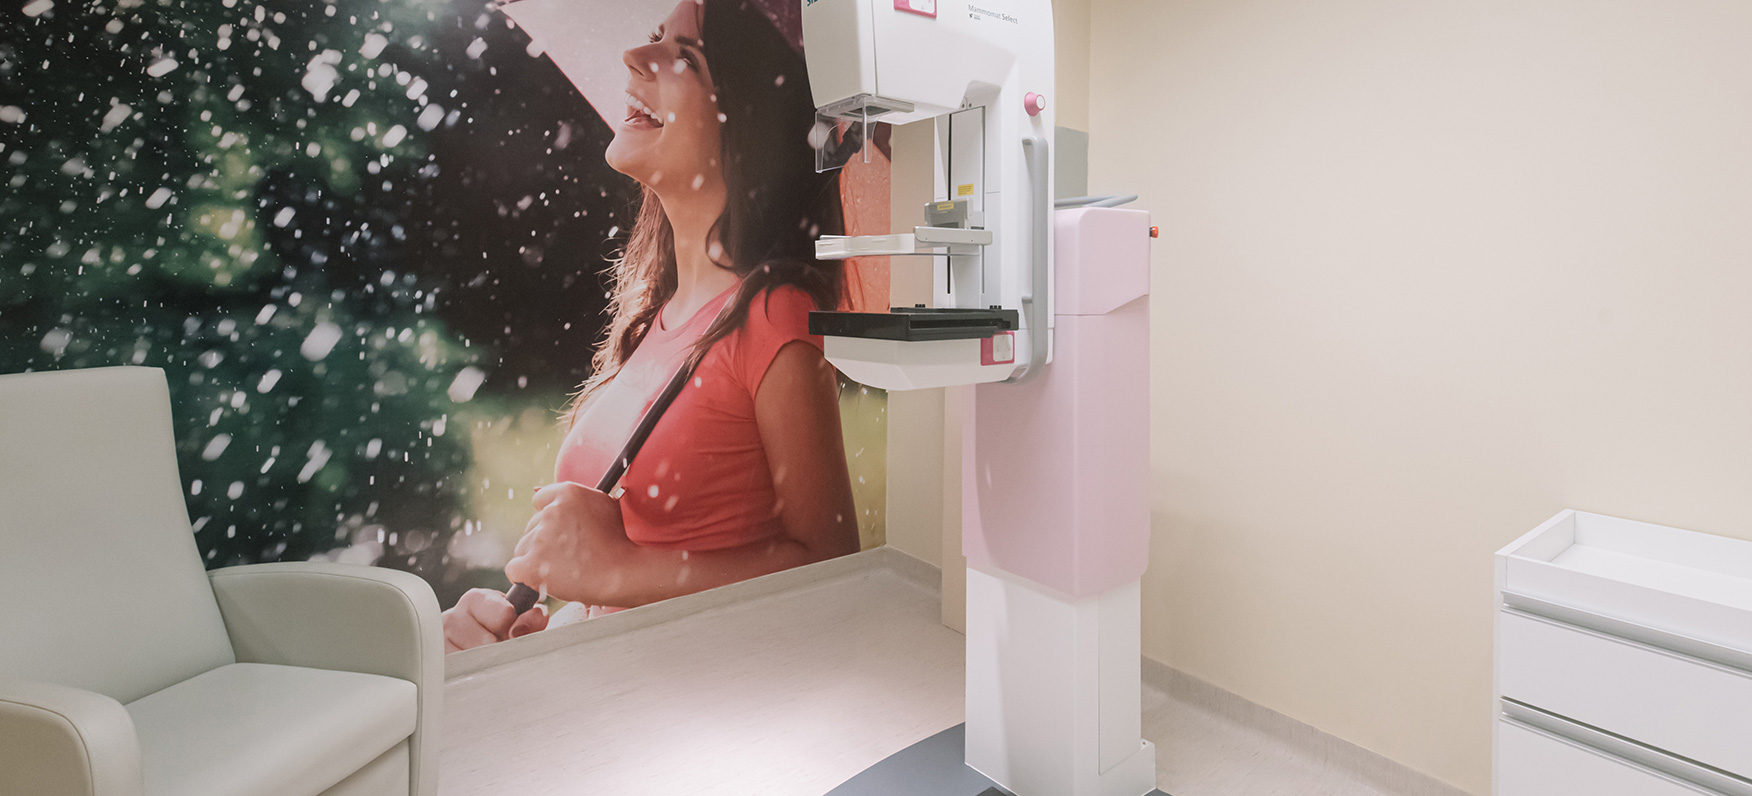 1 Sala de Mamografia